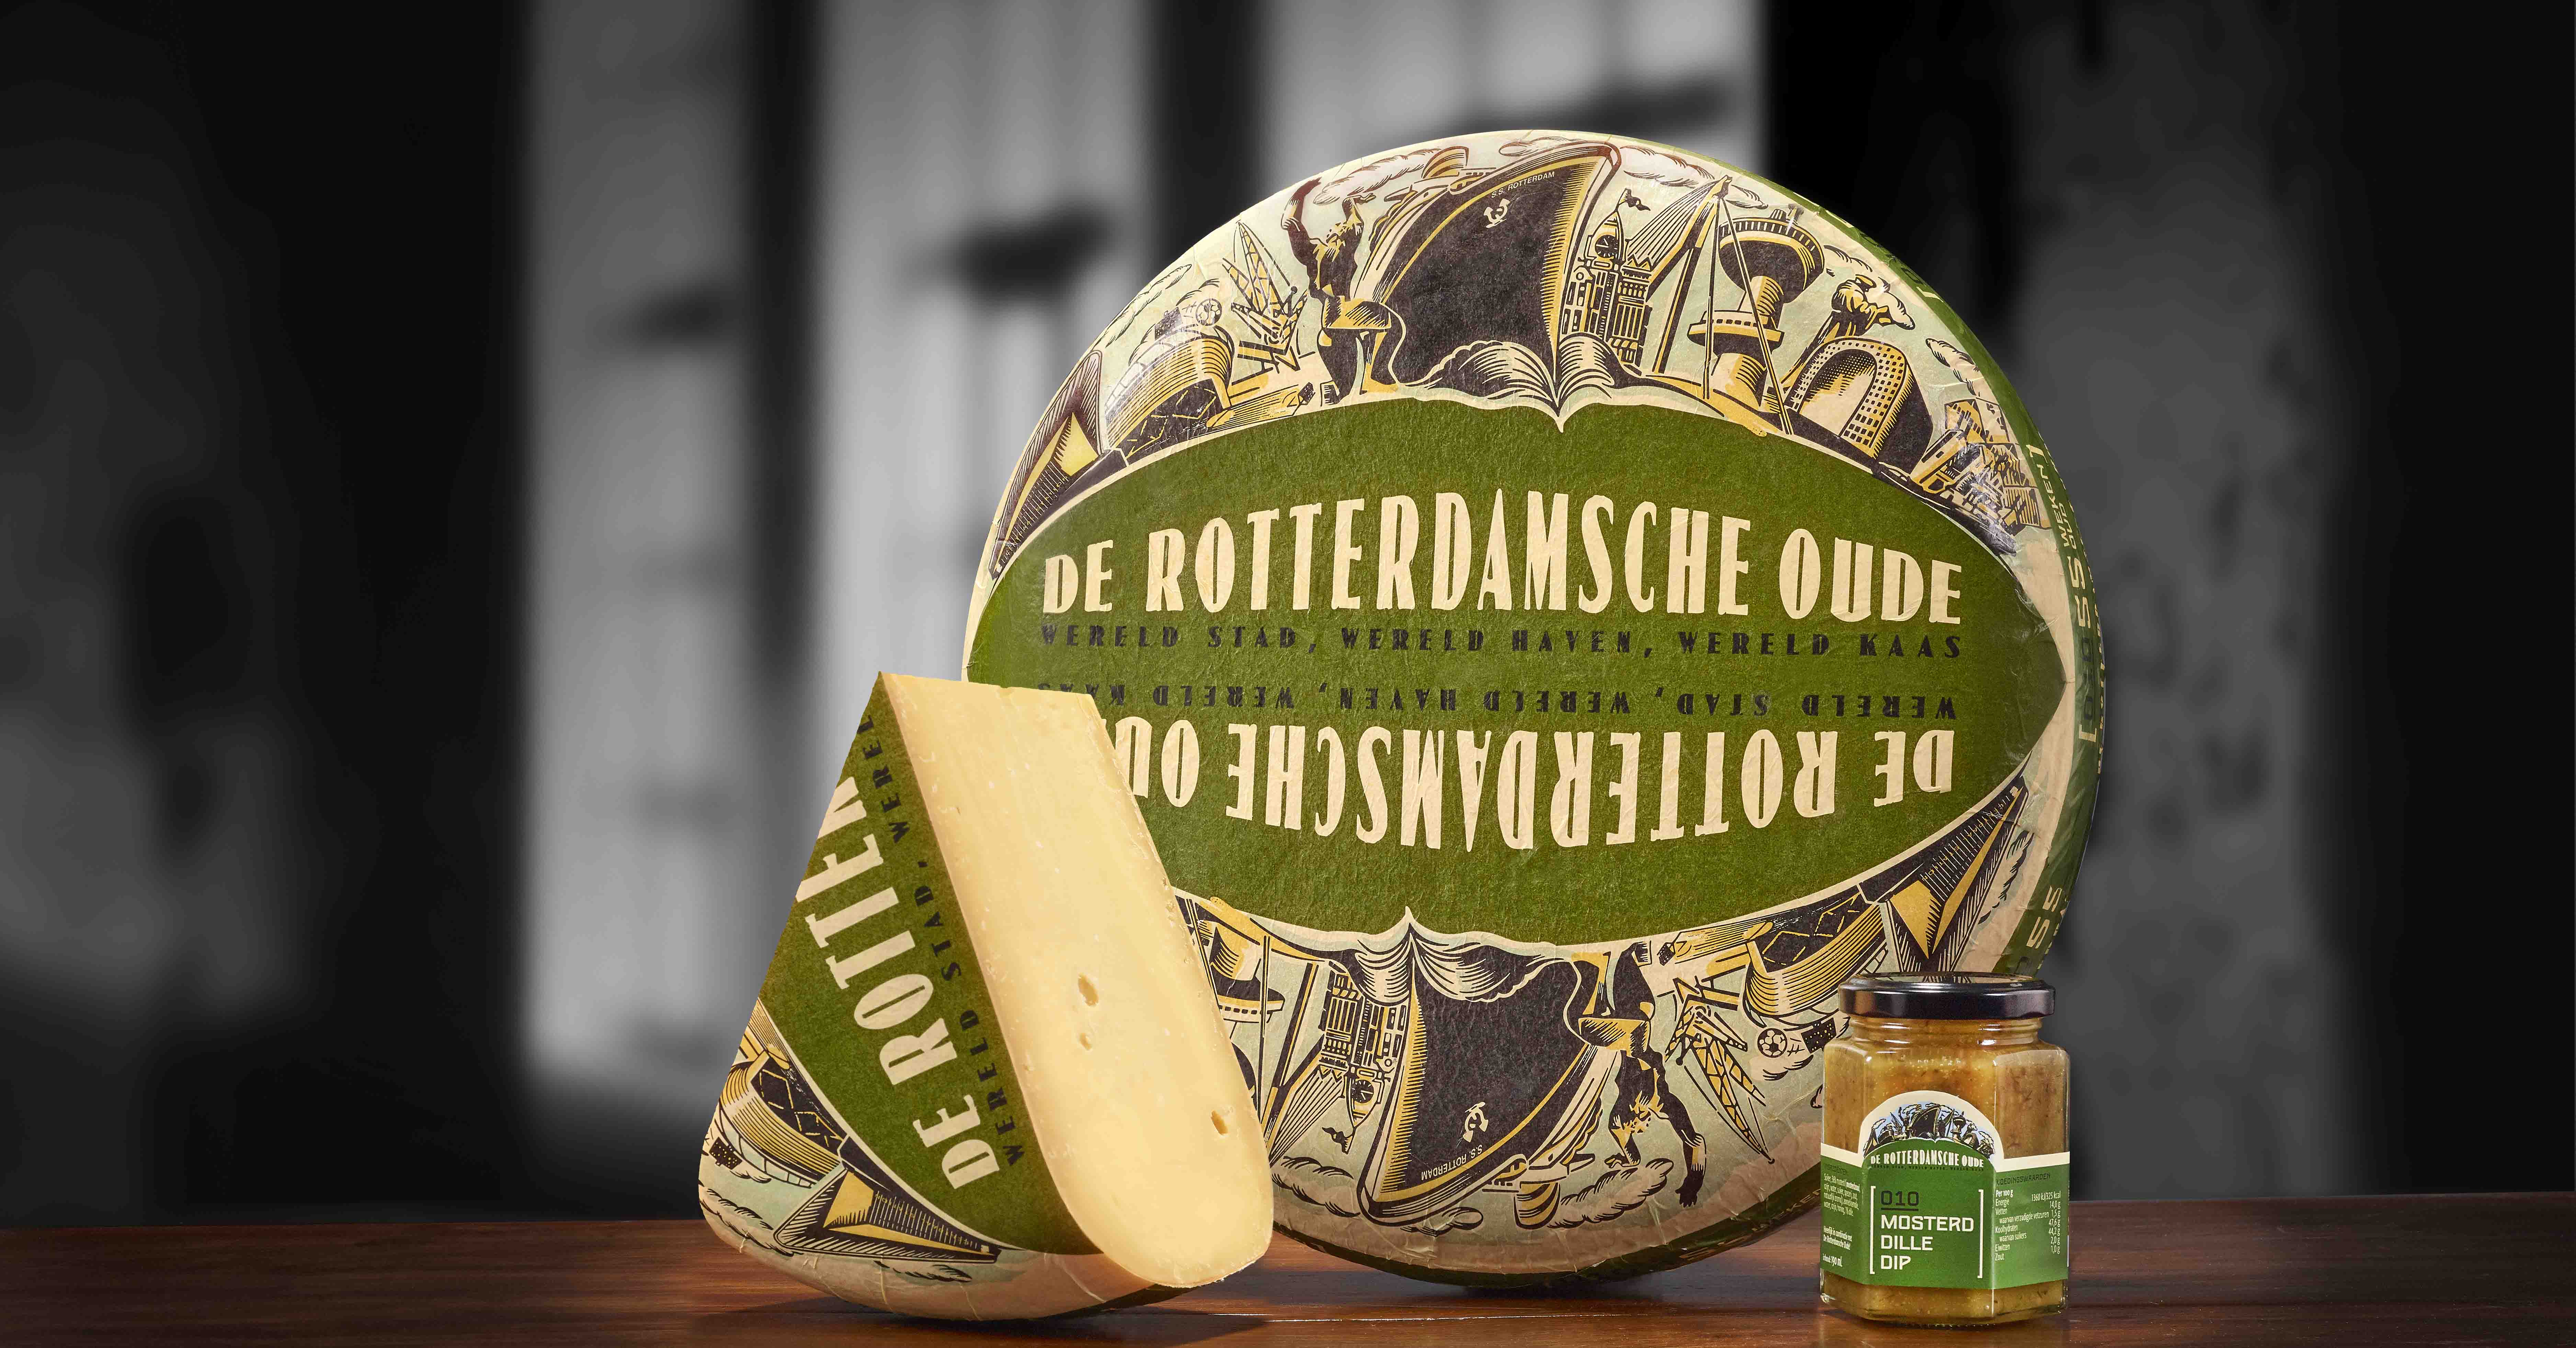 De Rotterdamsche Oude lekkerste oude Goudse kaas van Nederland